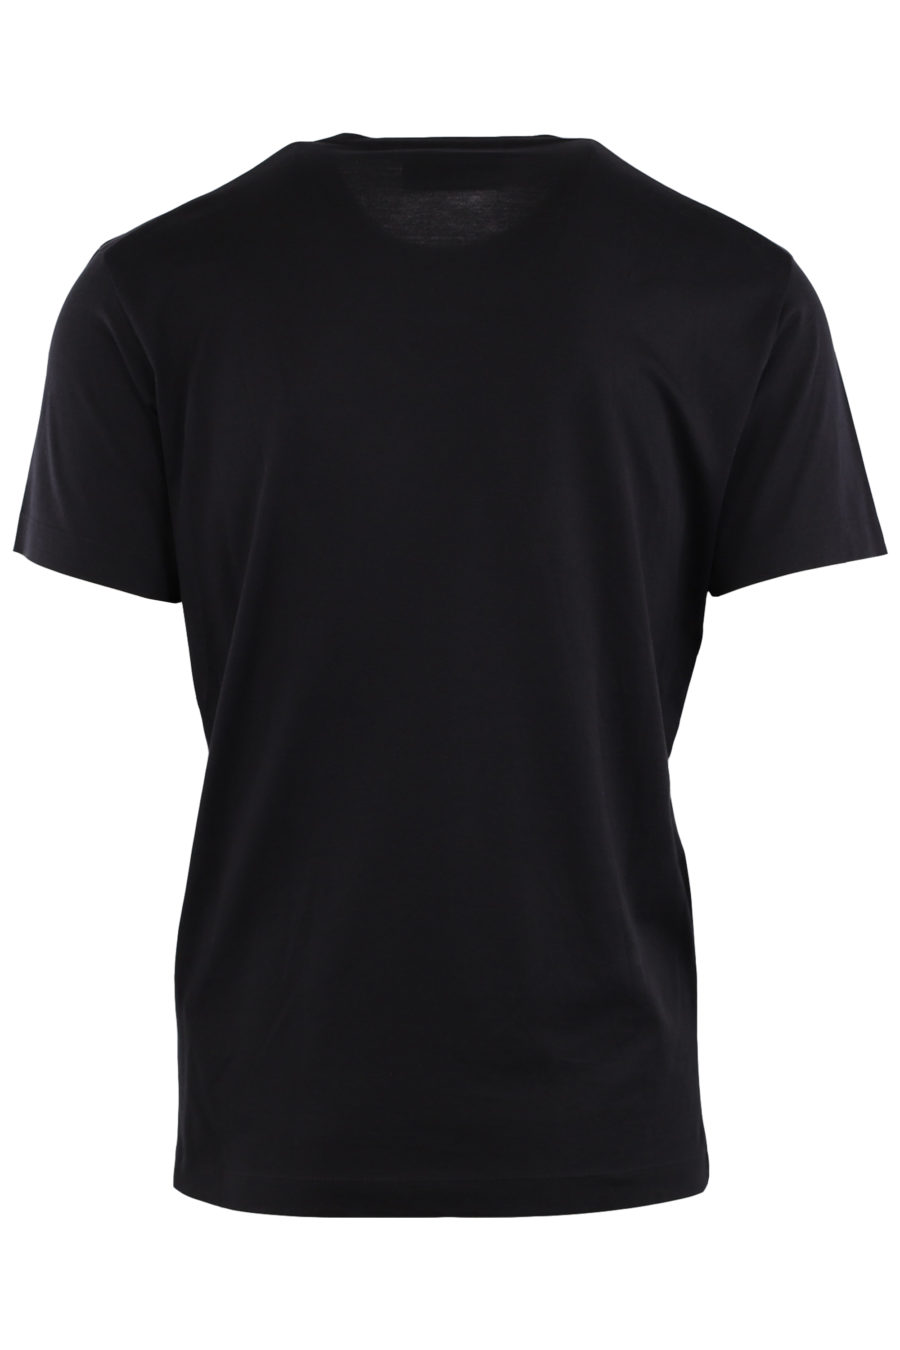 Camiseta negra con logotipo "Milano" - fa50a327d2ceaf90cda78be604b563f61105688d